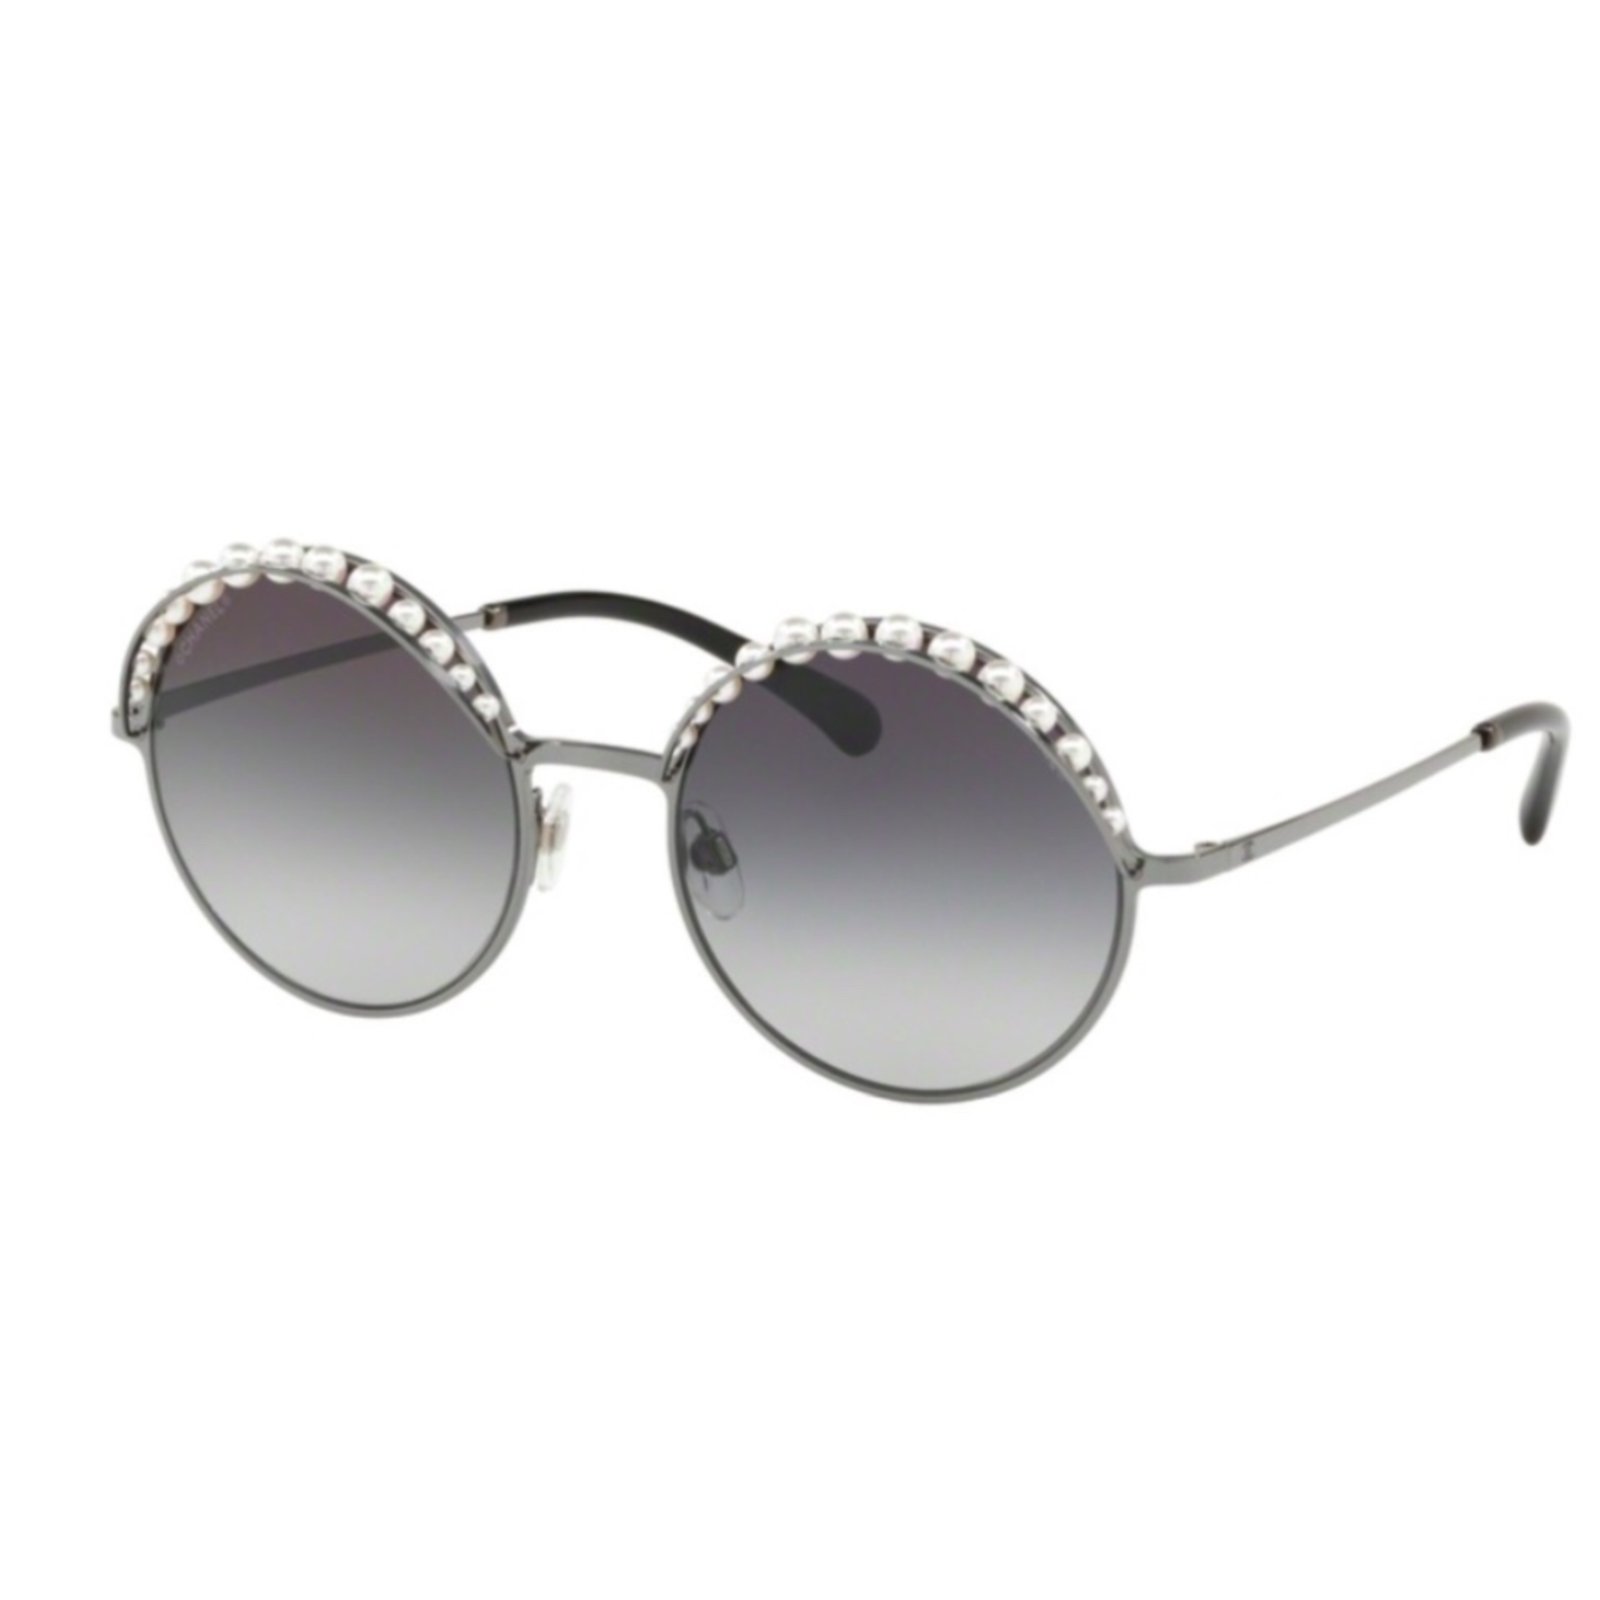 Chanel Chanel vintage sunglasses